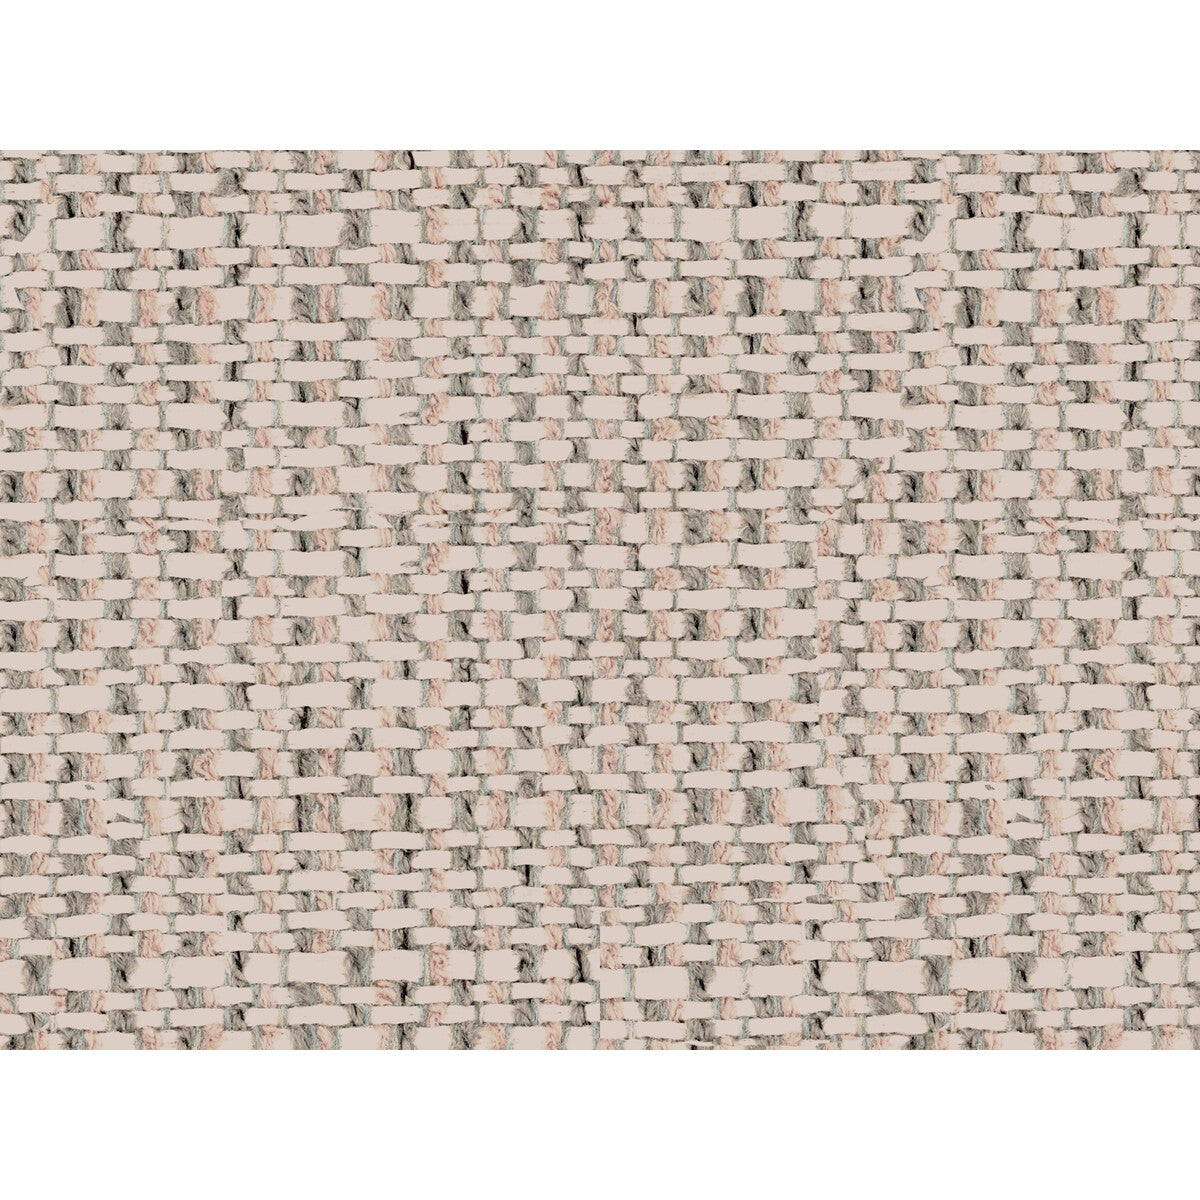 Kravet Smart fabric in 34323-1611 color - pattern 34323.1611.0 - by Kravet Smart